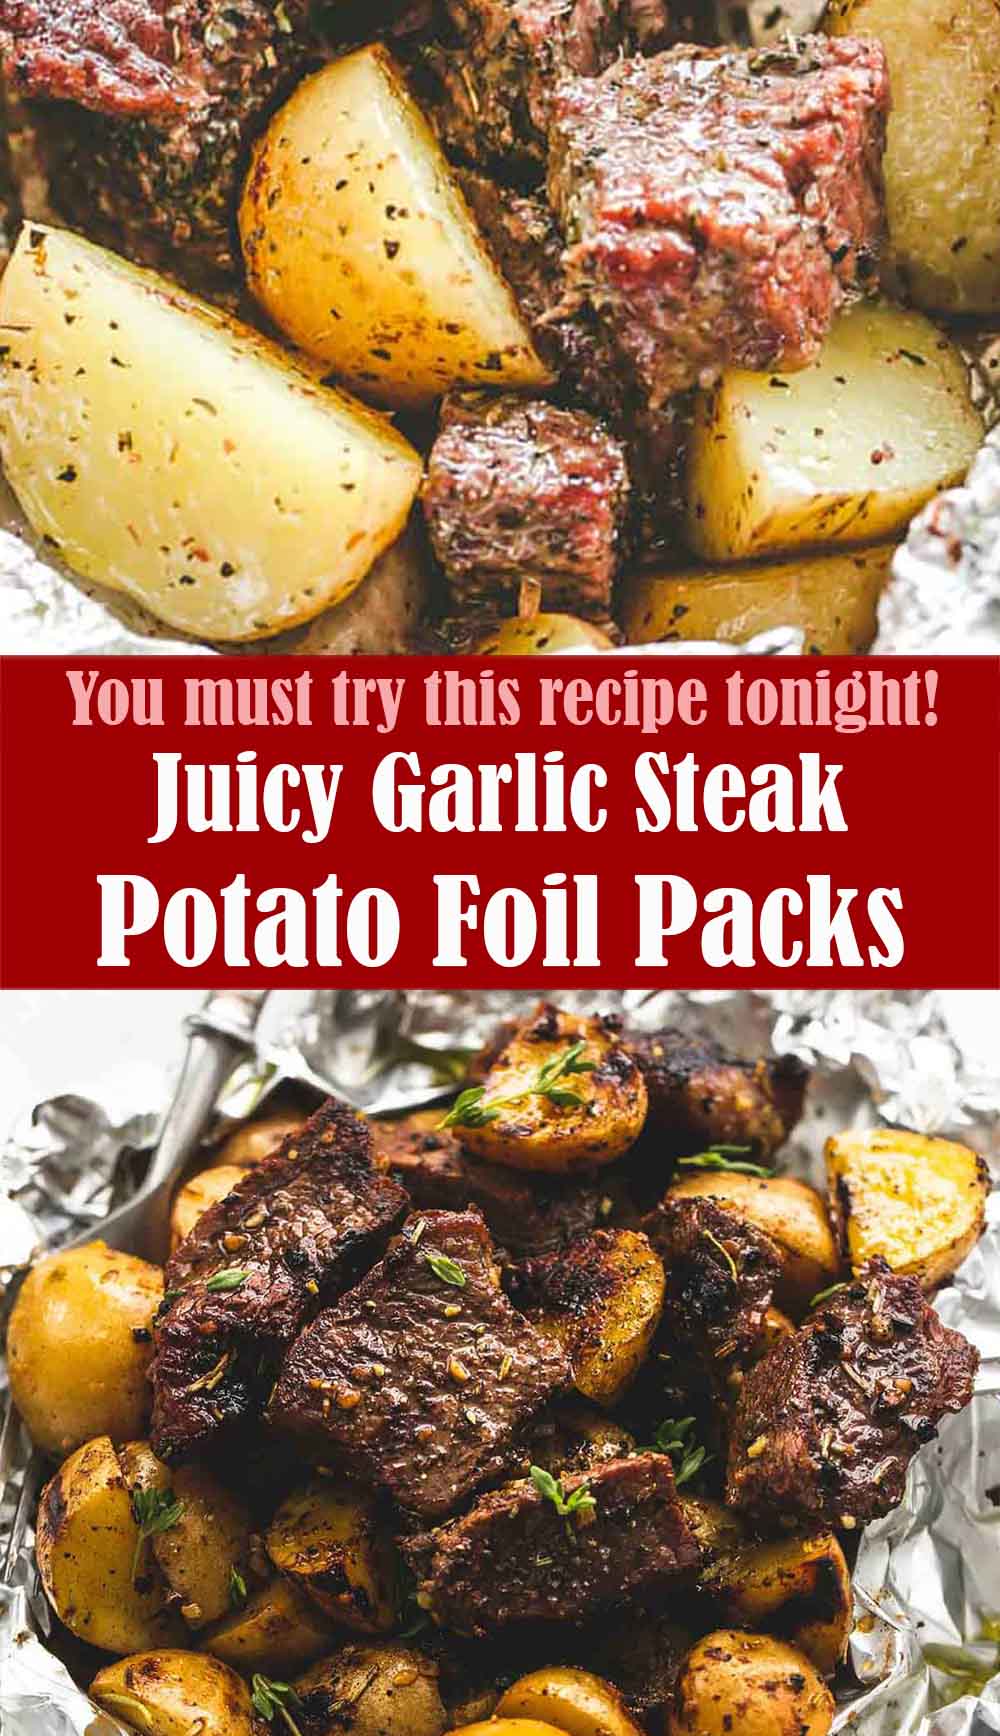 Juicy Garlic Steak and Potato Foil Packs